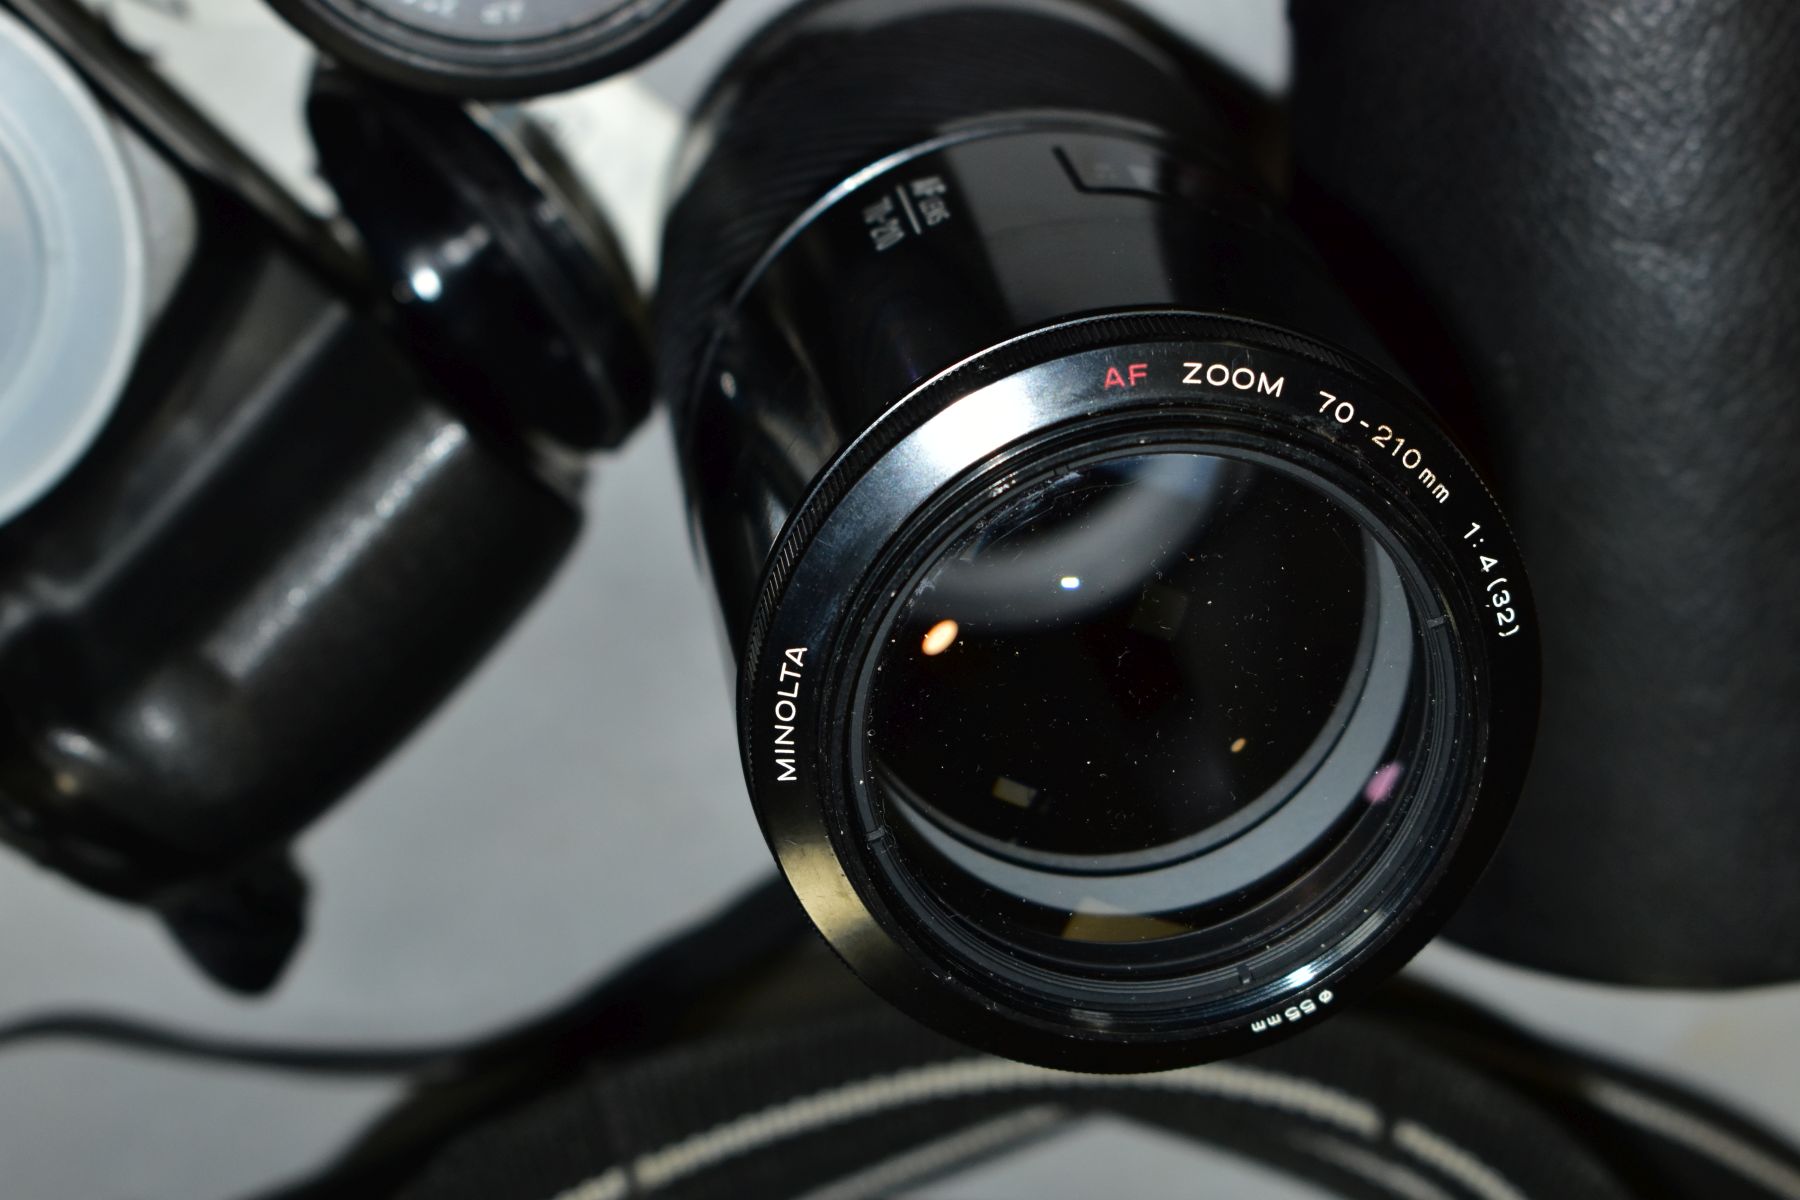 PHOTOGRAPHIC EQUIPMENT comprising a Minolta Dynax 300SI camera body, Minolta 35-70 zoom lens, - Image 7 of 9